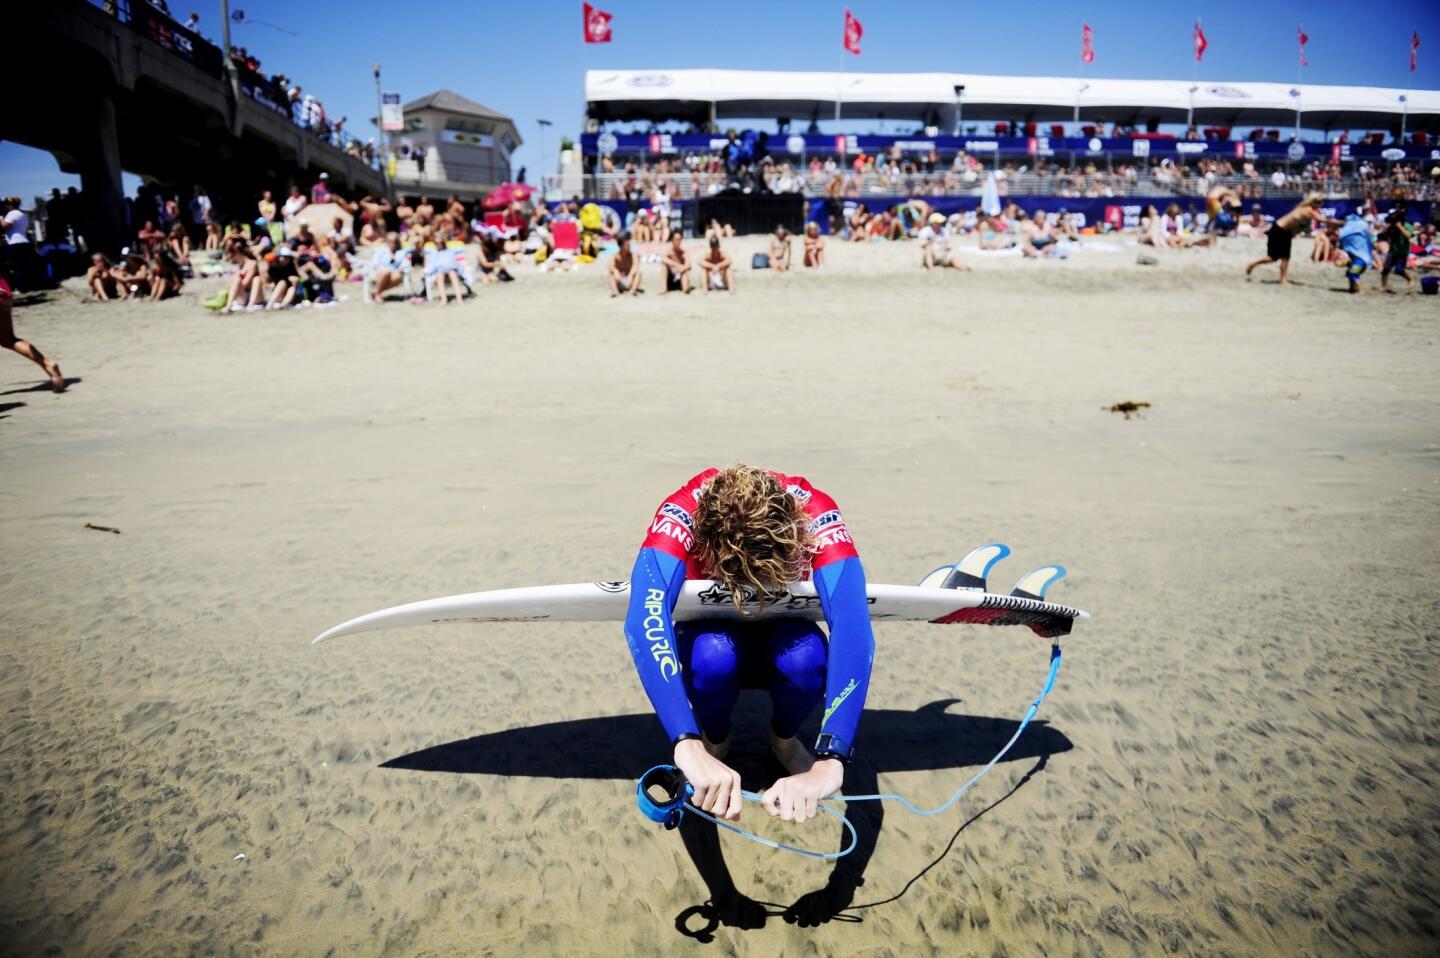 U.S. surfer Taylor Clark limbers up